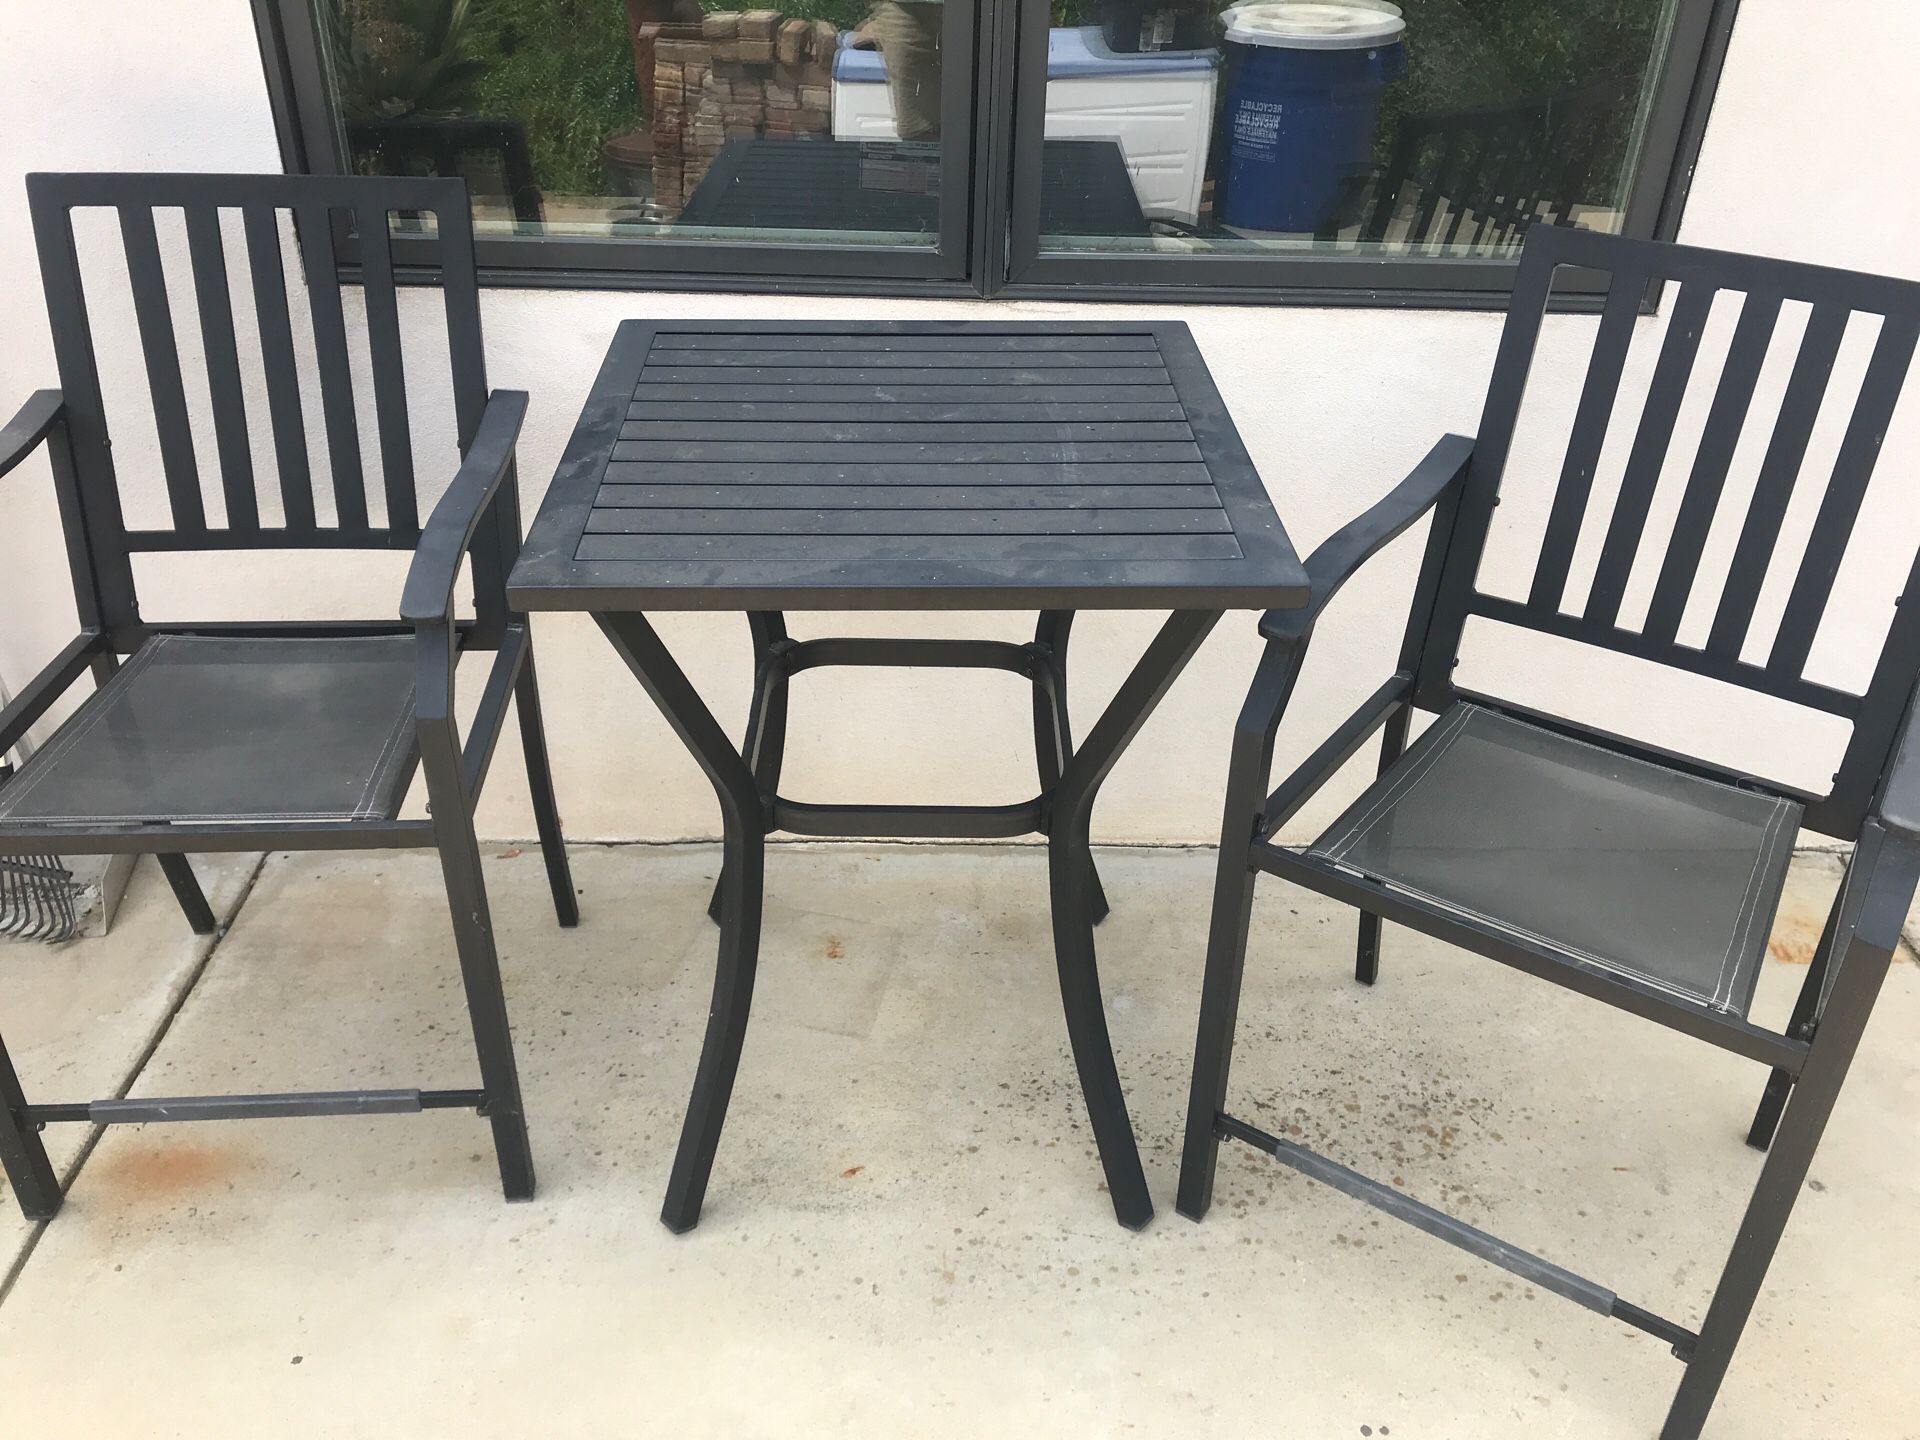 3 piece patio set